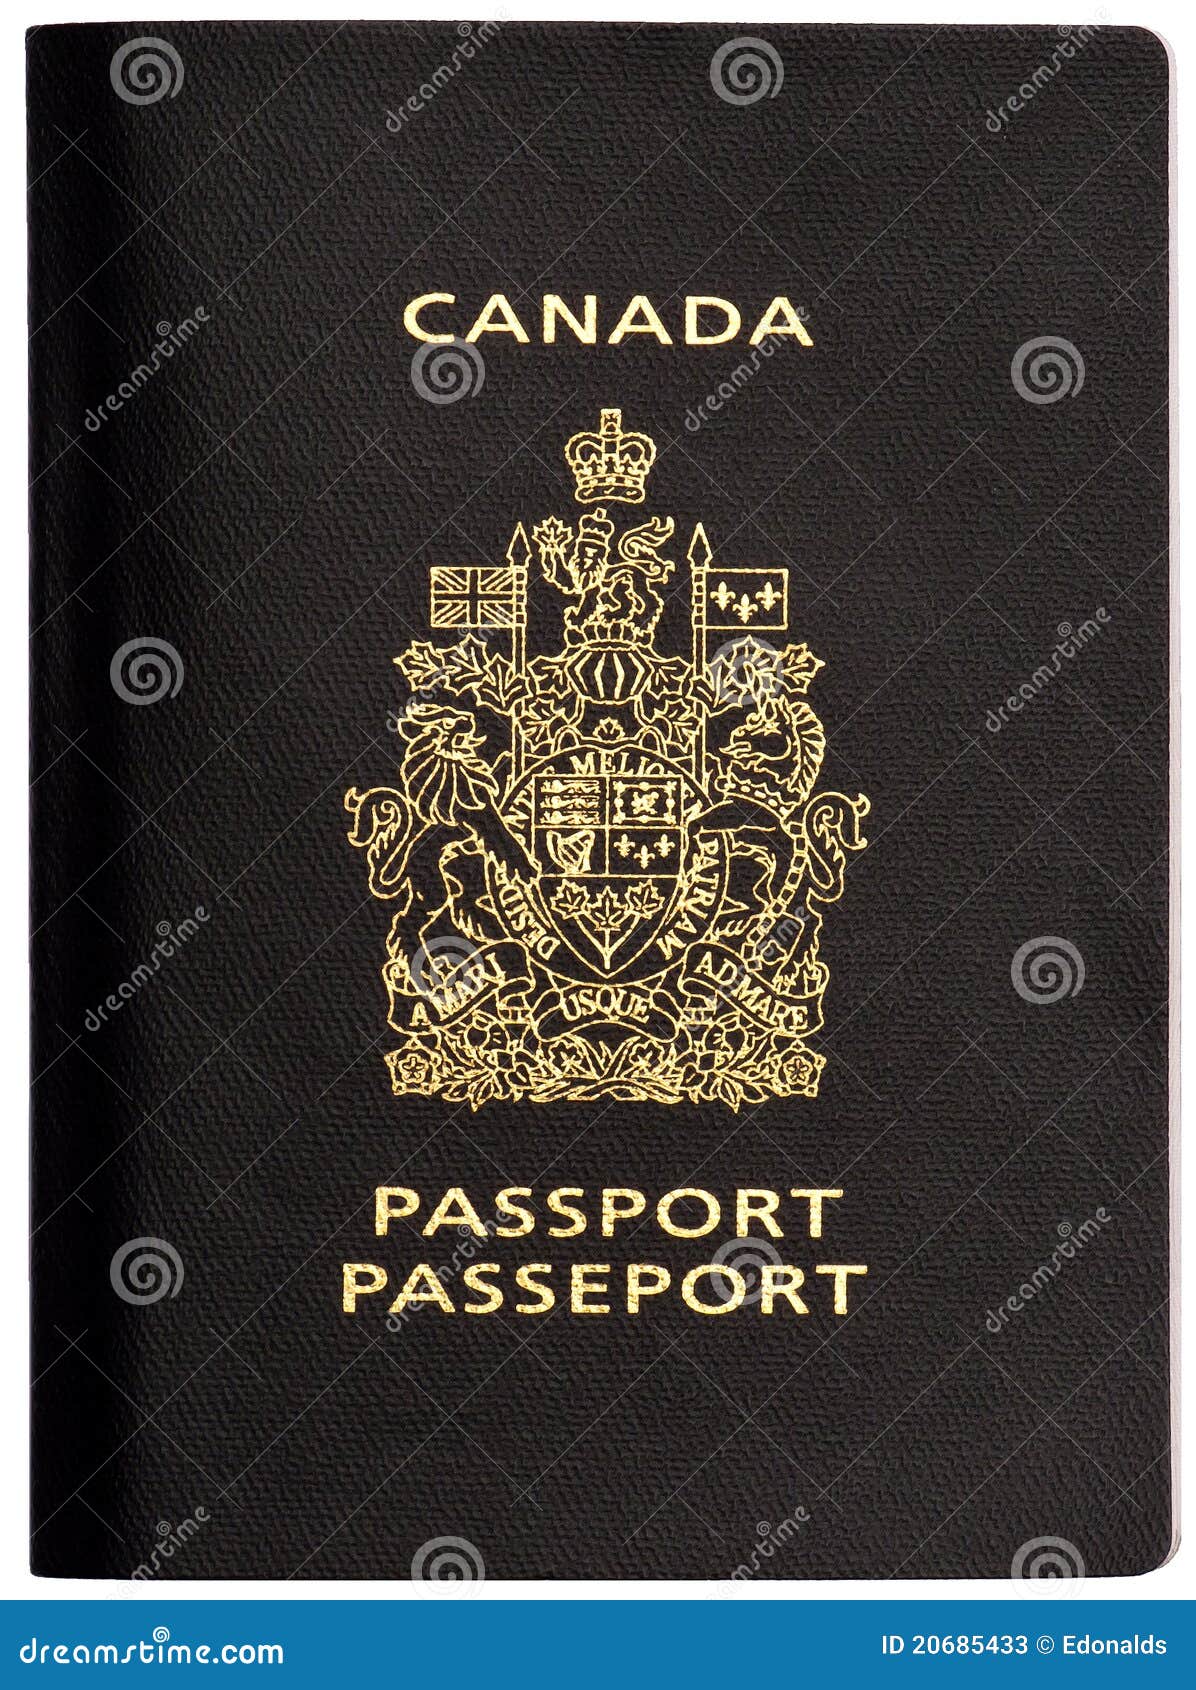 Canadian Passport Stock Image Image Of Overwhite Customs 20685433